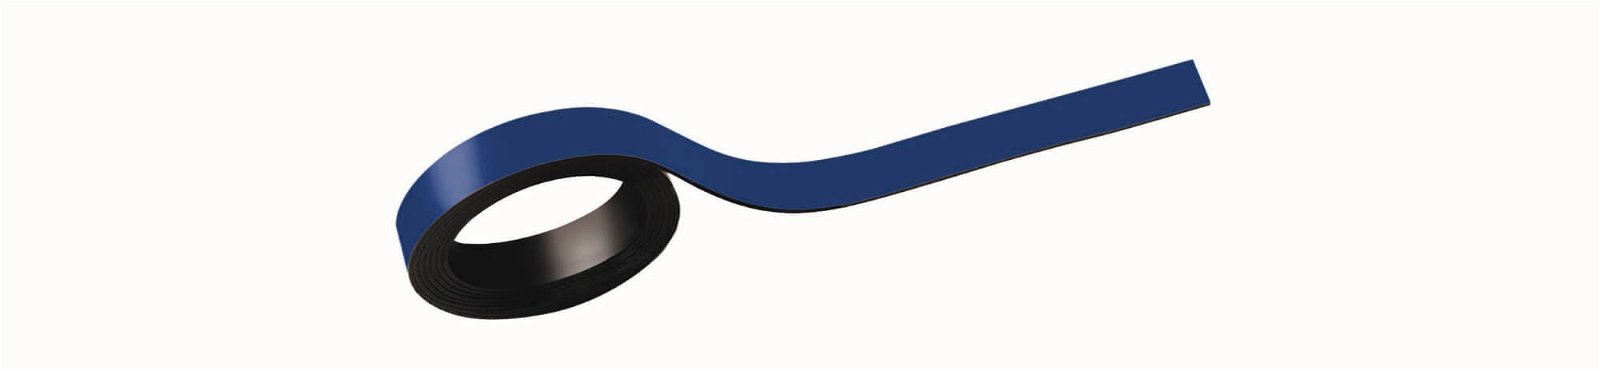 Magnetstreifen, 1x100 cm, 2 St./Set, blau